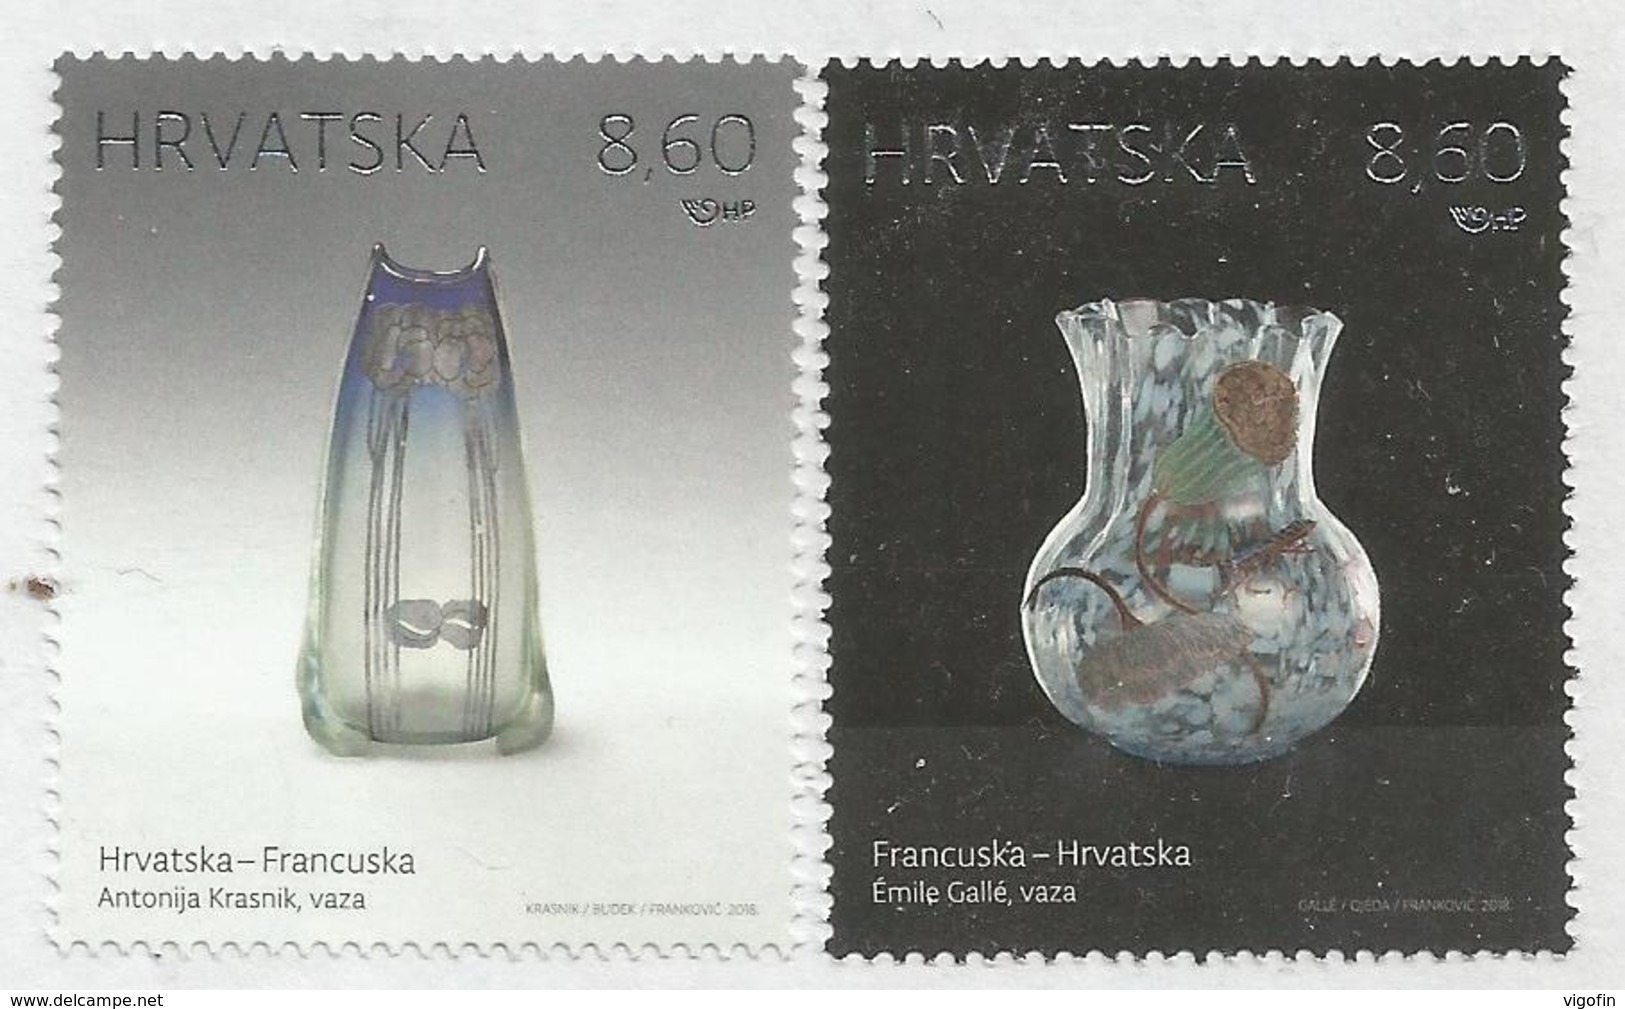 HR 2018-1346-7 JOINT ISSUES FRANCA HRVATSKA, CROATIA HRVATSKA, 1 X 2v, MNH - Croatie